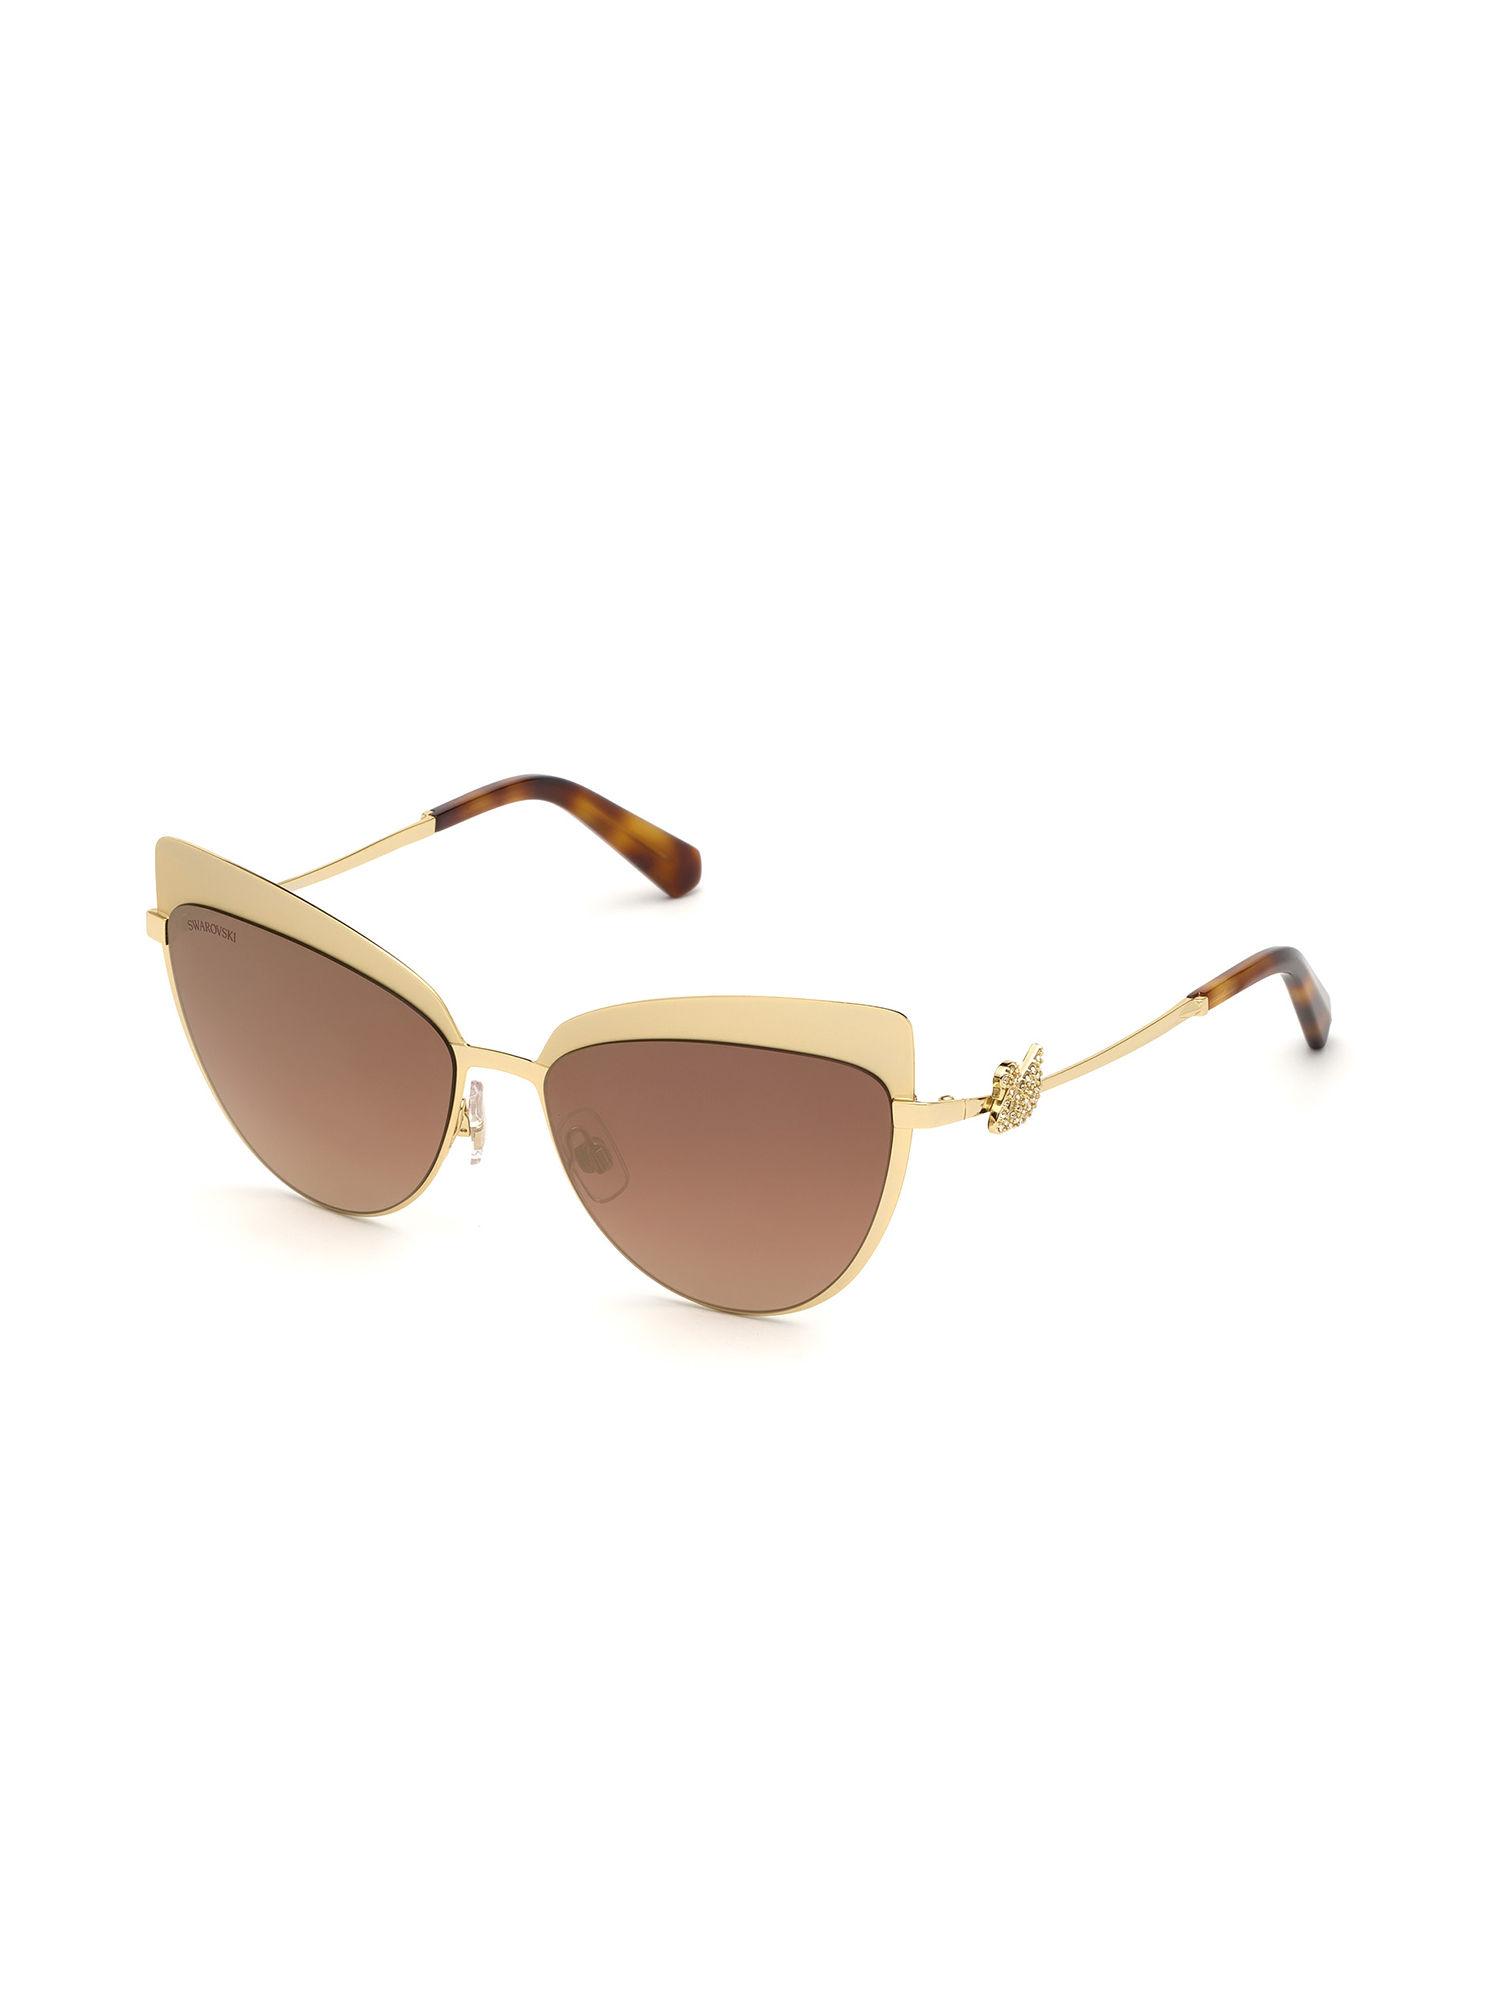 brown cat eye women sunglasses sk0220 56 32g